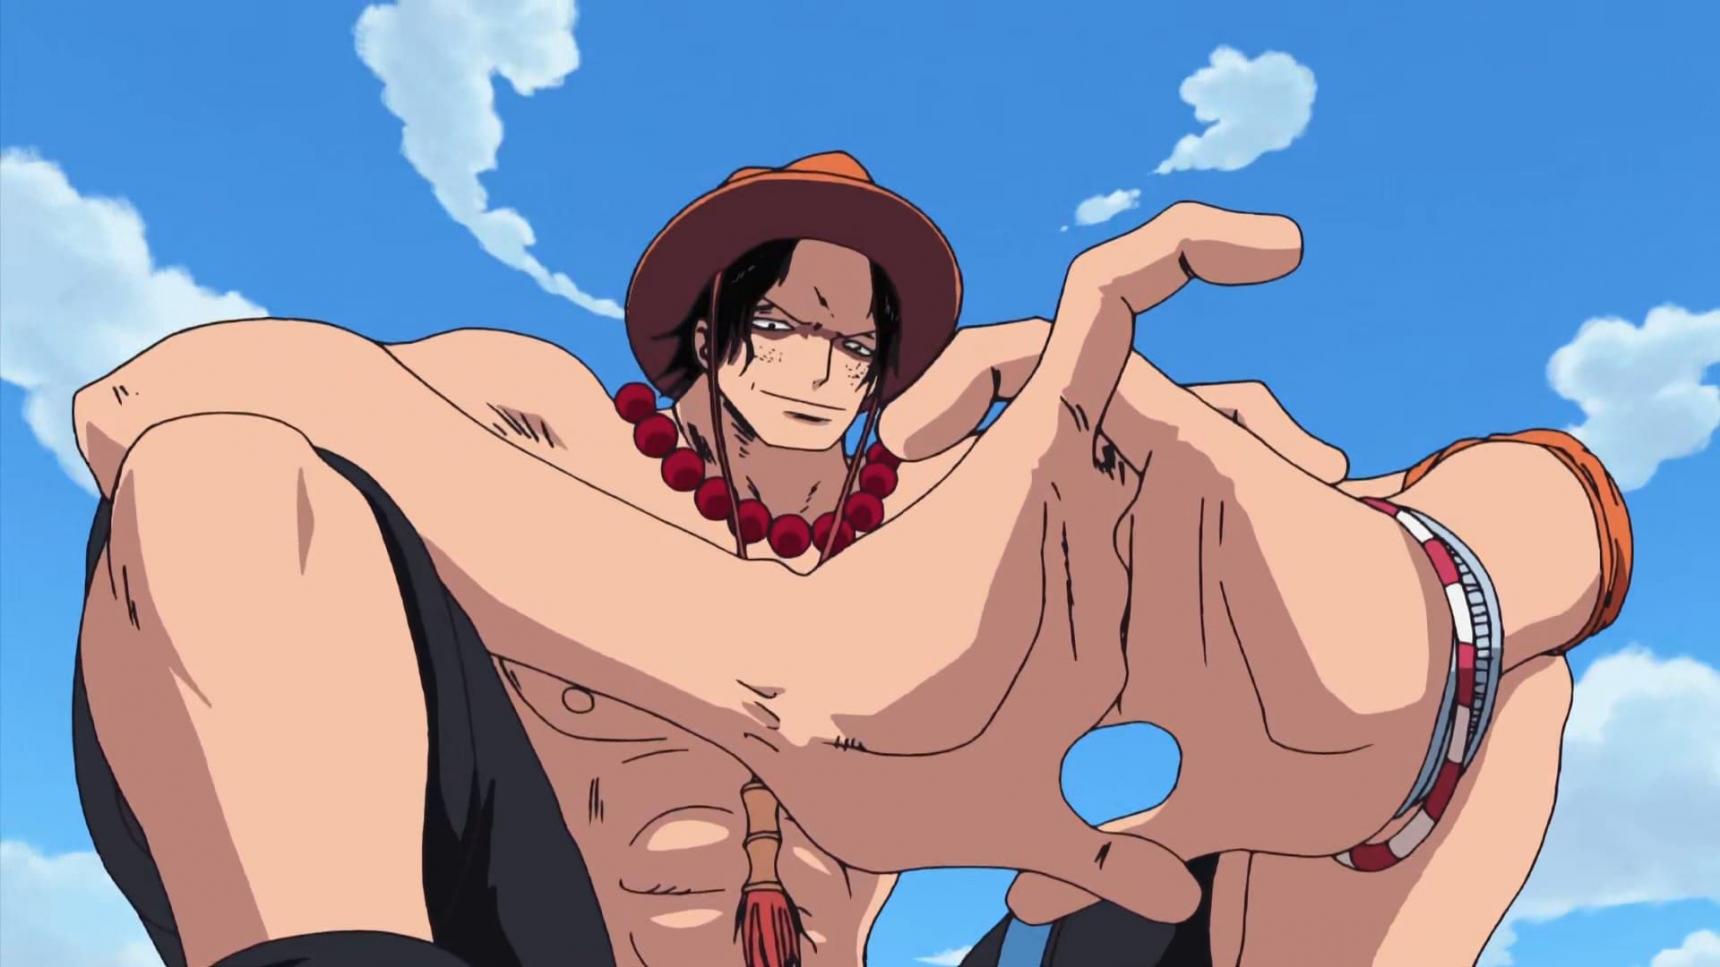 Poster del episodio 325 de One Piece online